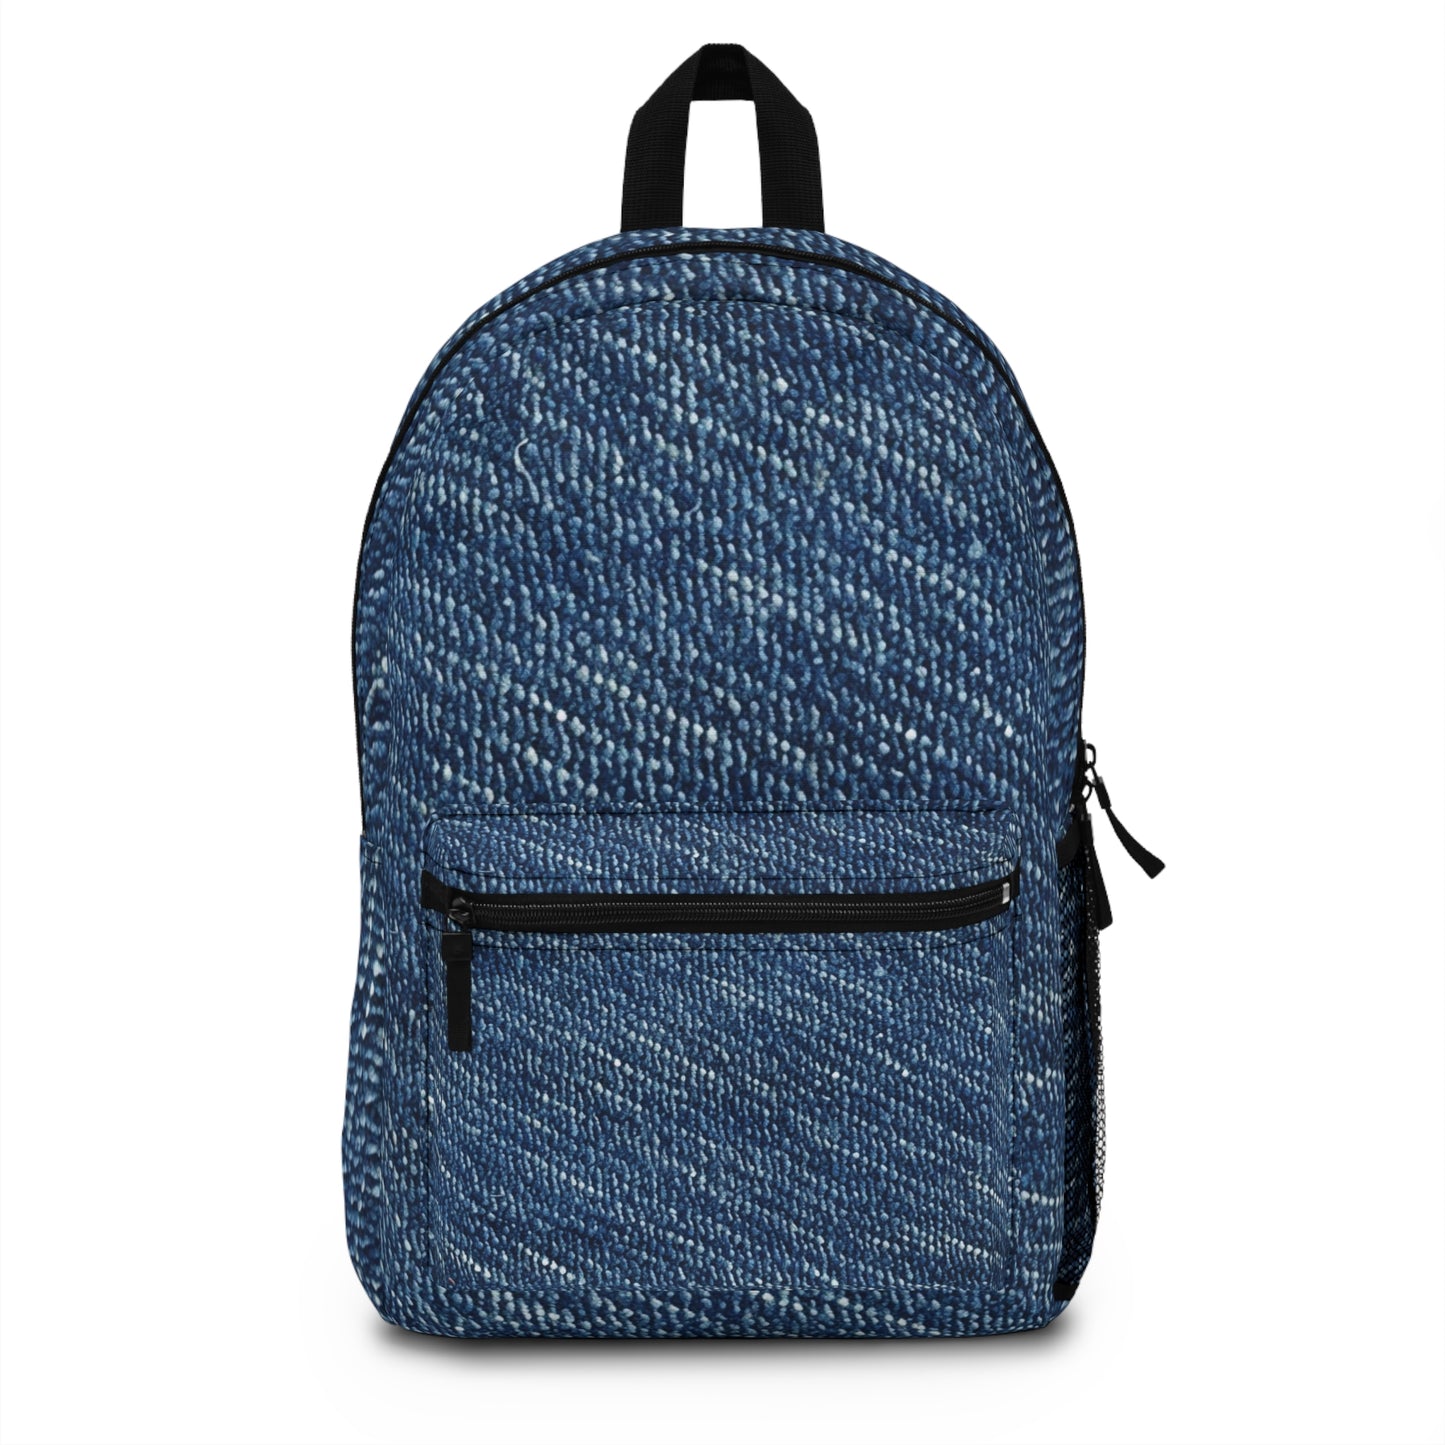 Denim-Inspired Design - Distinct Textured Fabric Pattern - Backpack